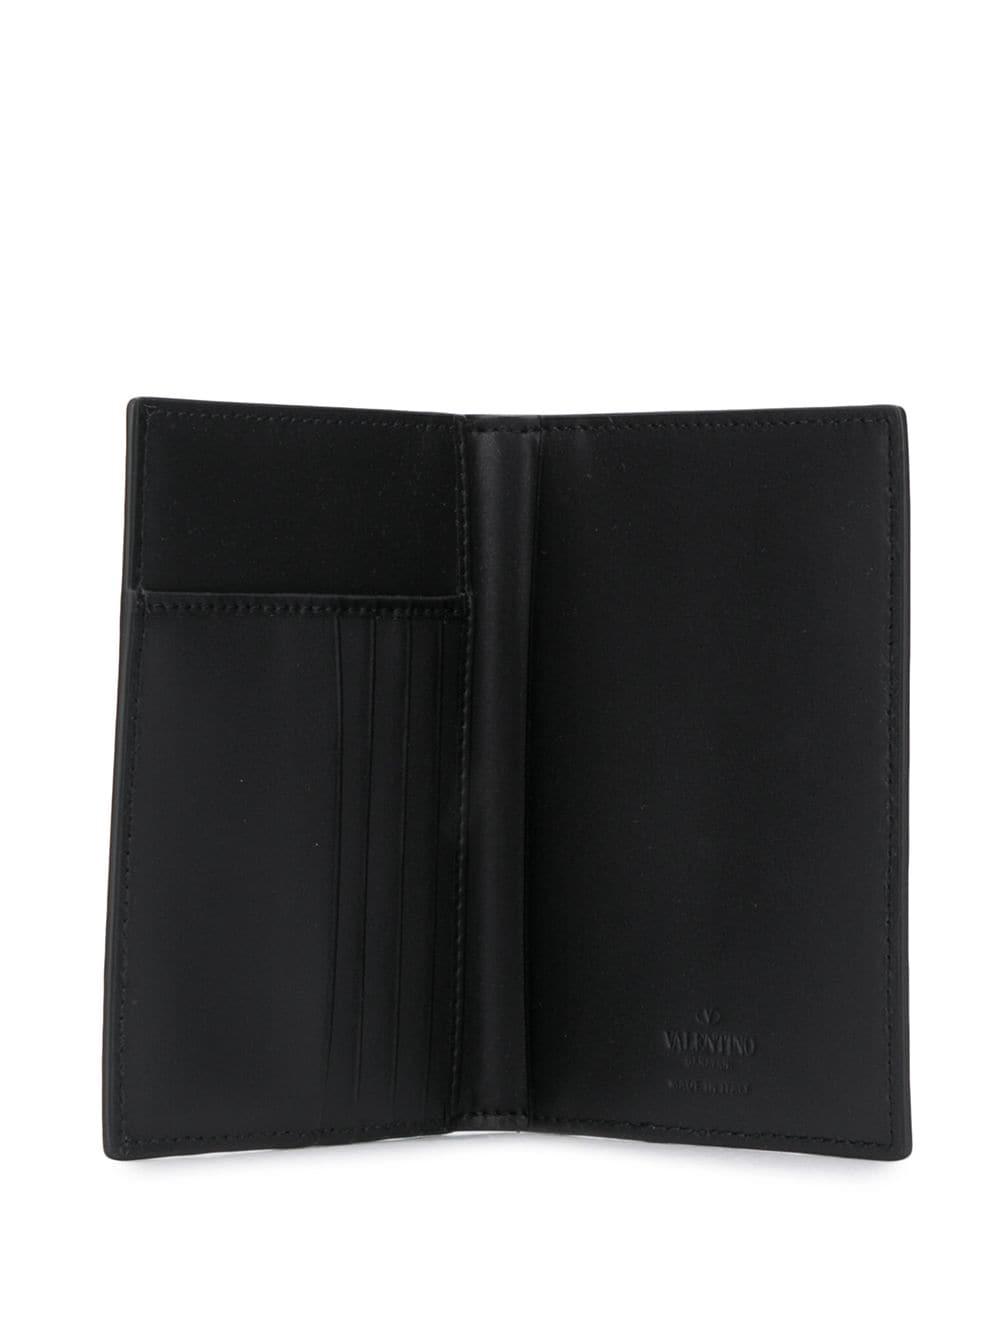 Valentino Garavani Leather Vltn Bi-fold Wallet in Black for Men - Lyst